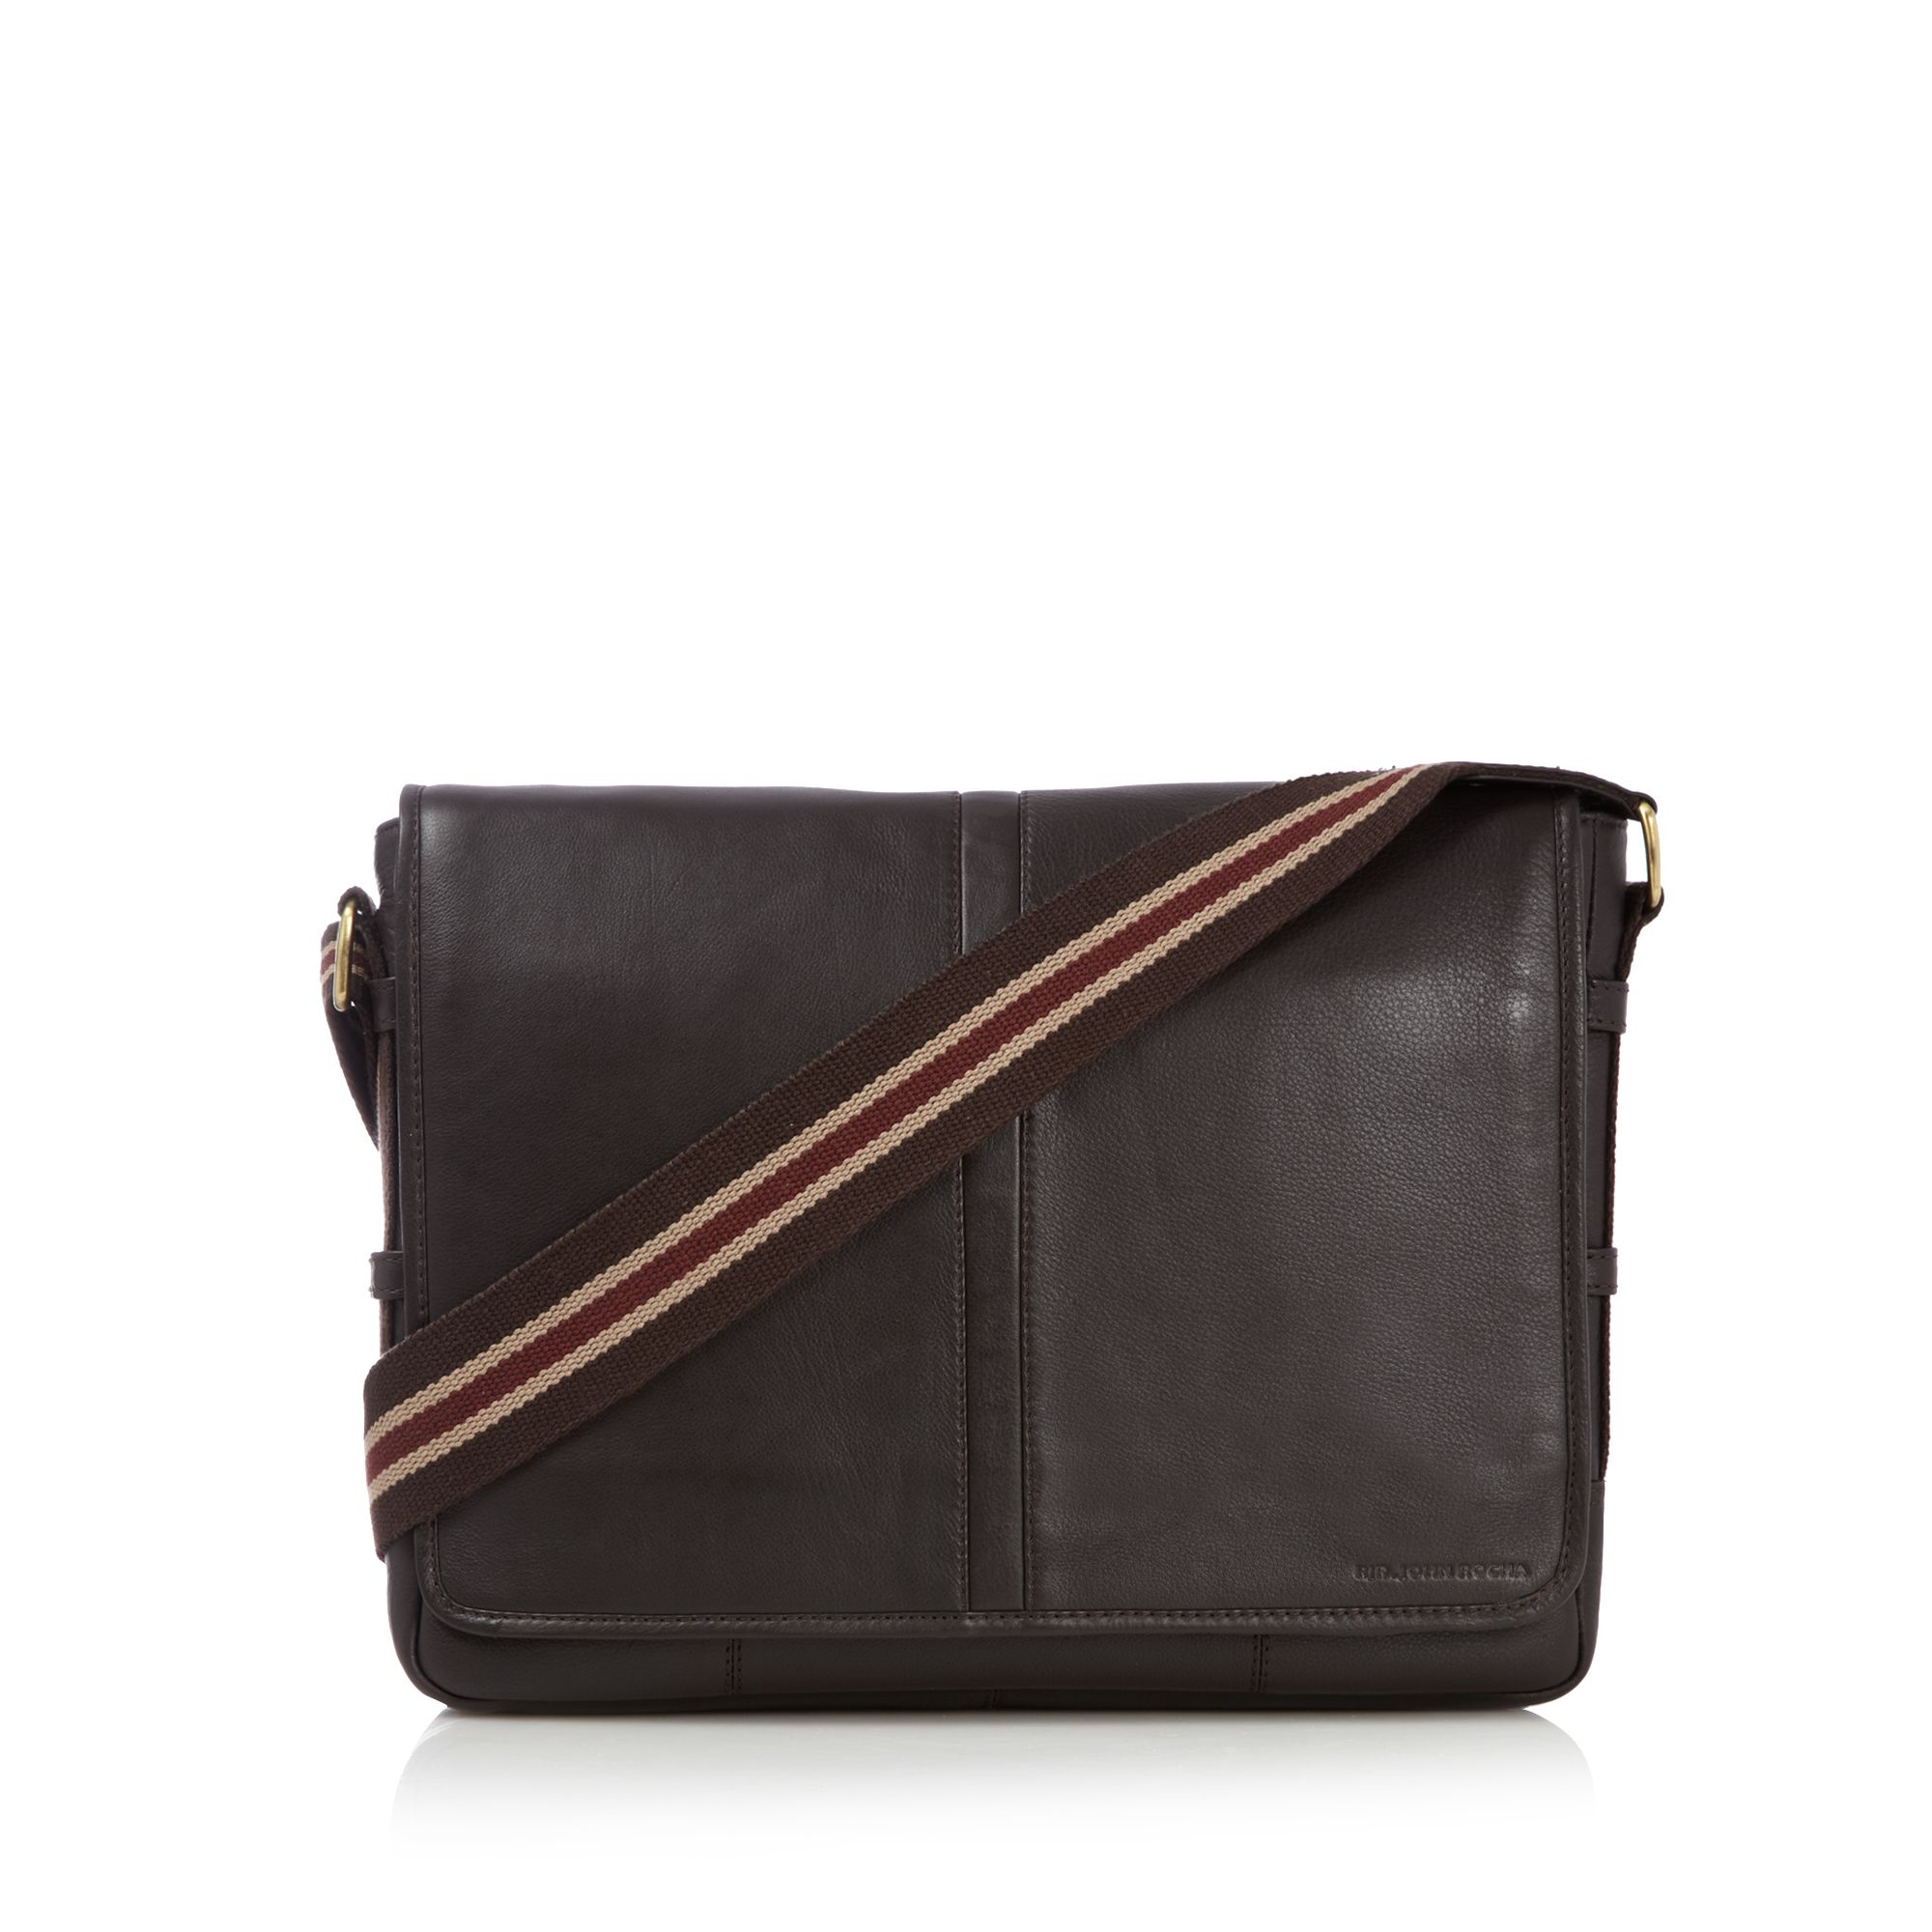 Rjr.John Rocha Mens Designer Brown Leather Despatch Bag From Debenhams | eBay